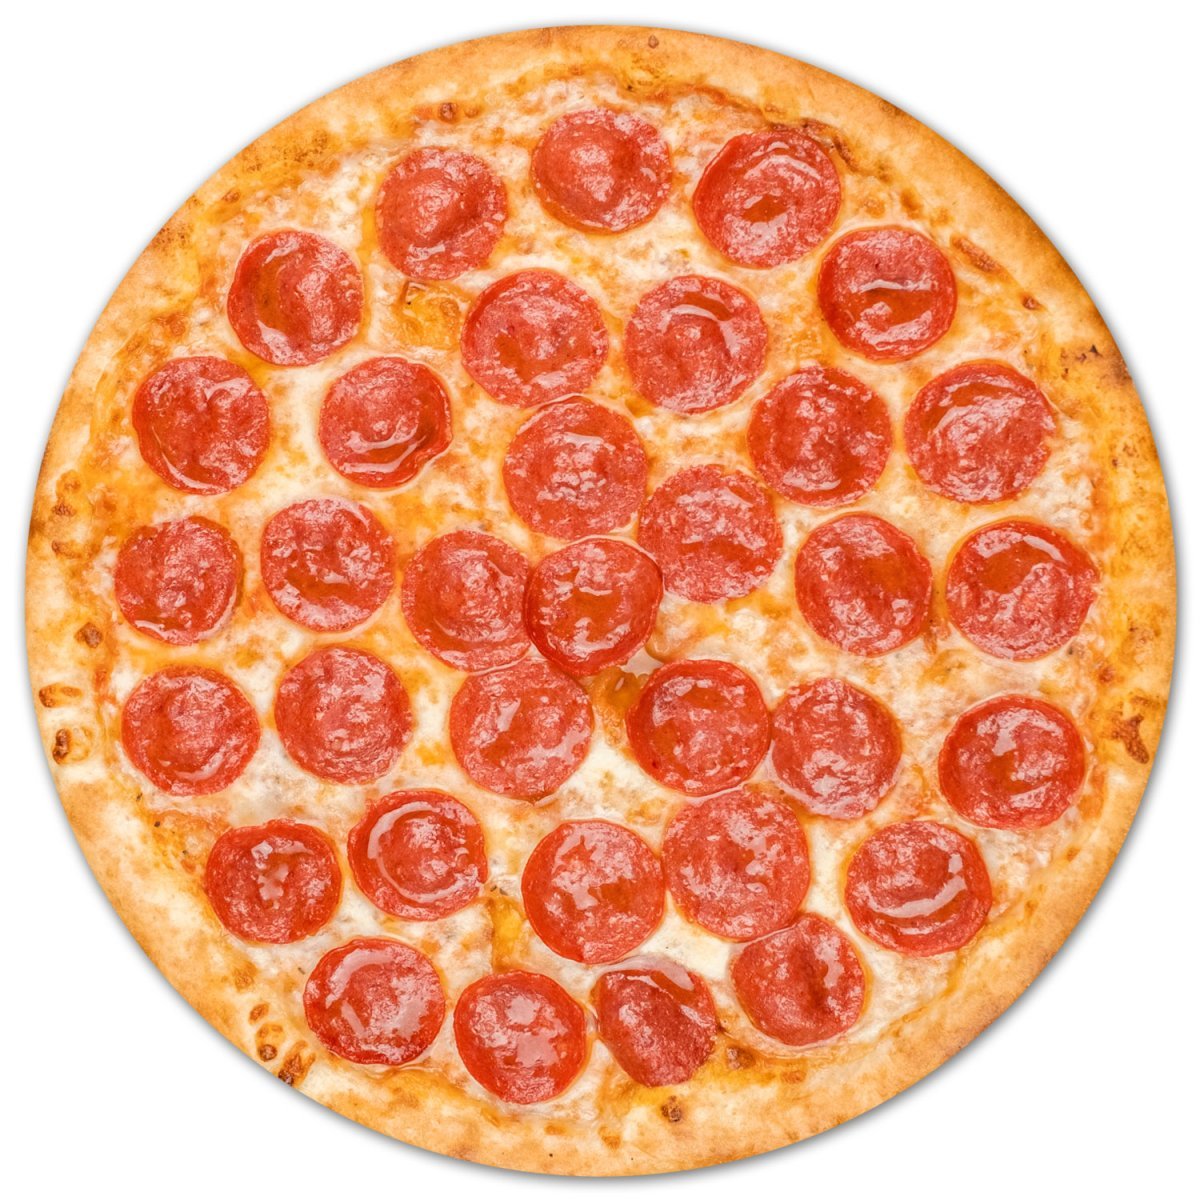 состав на пиццу пепперони фото 14